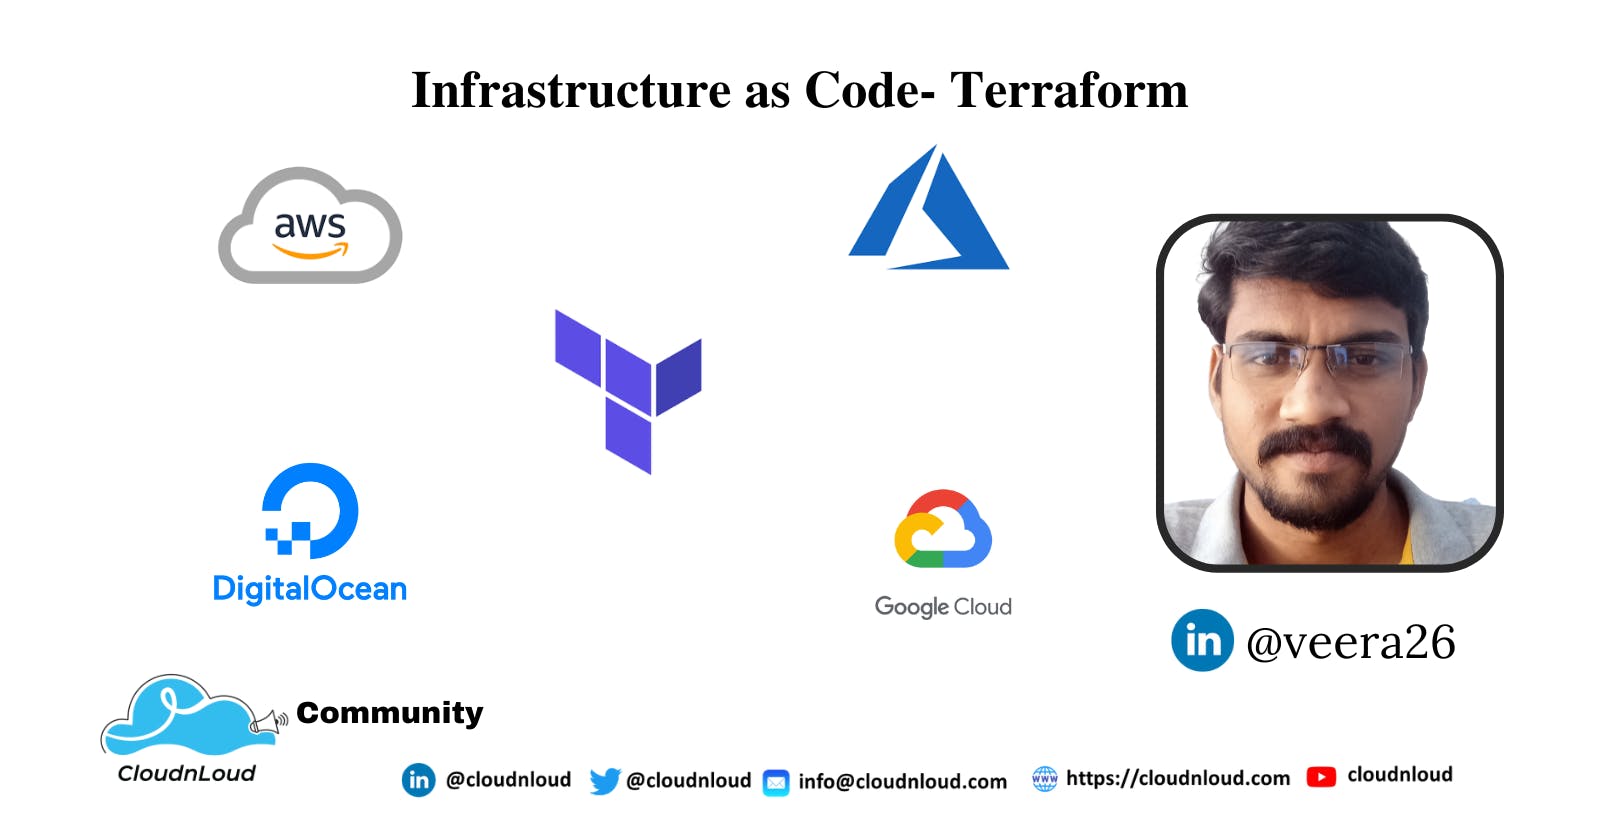 Infrastructure as Code - Terraform